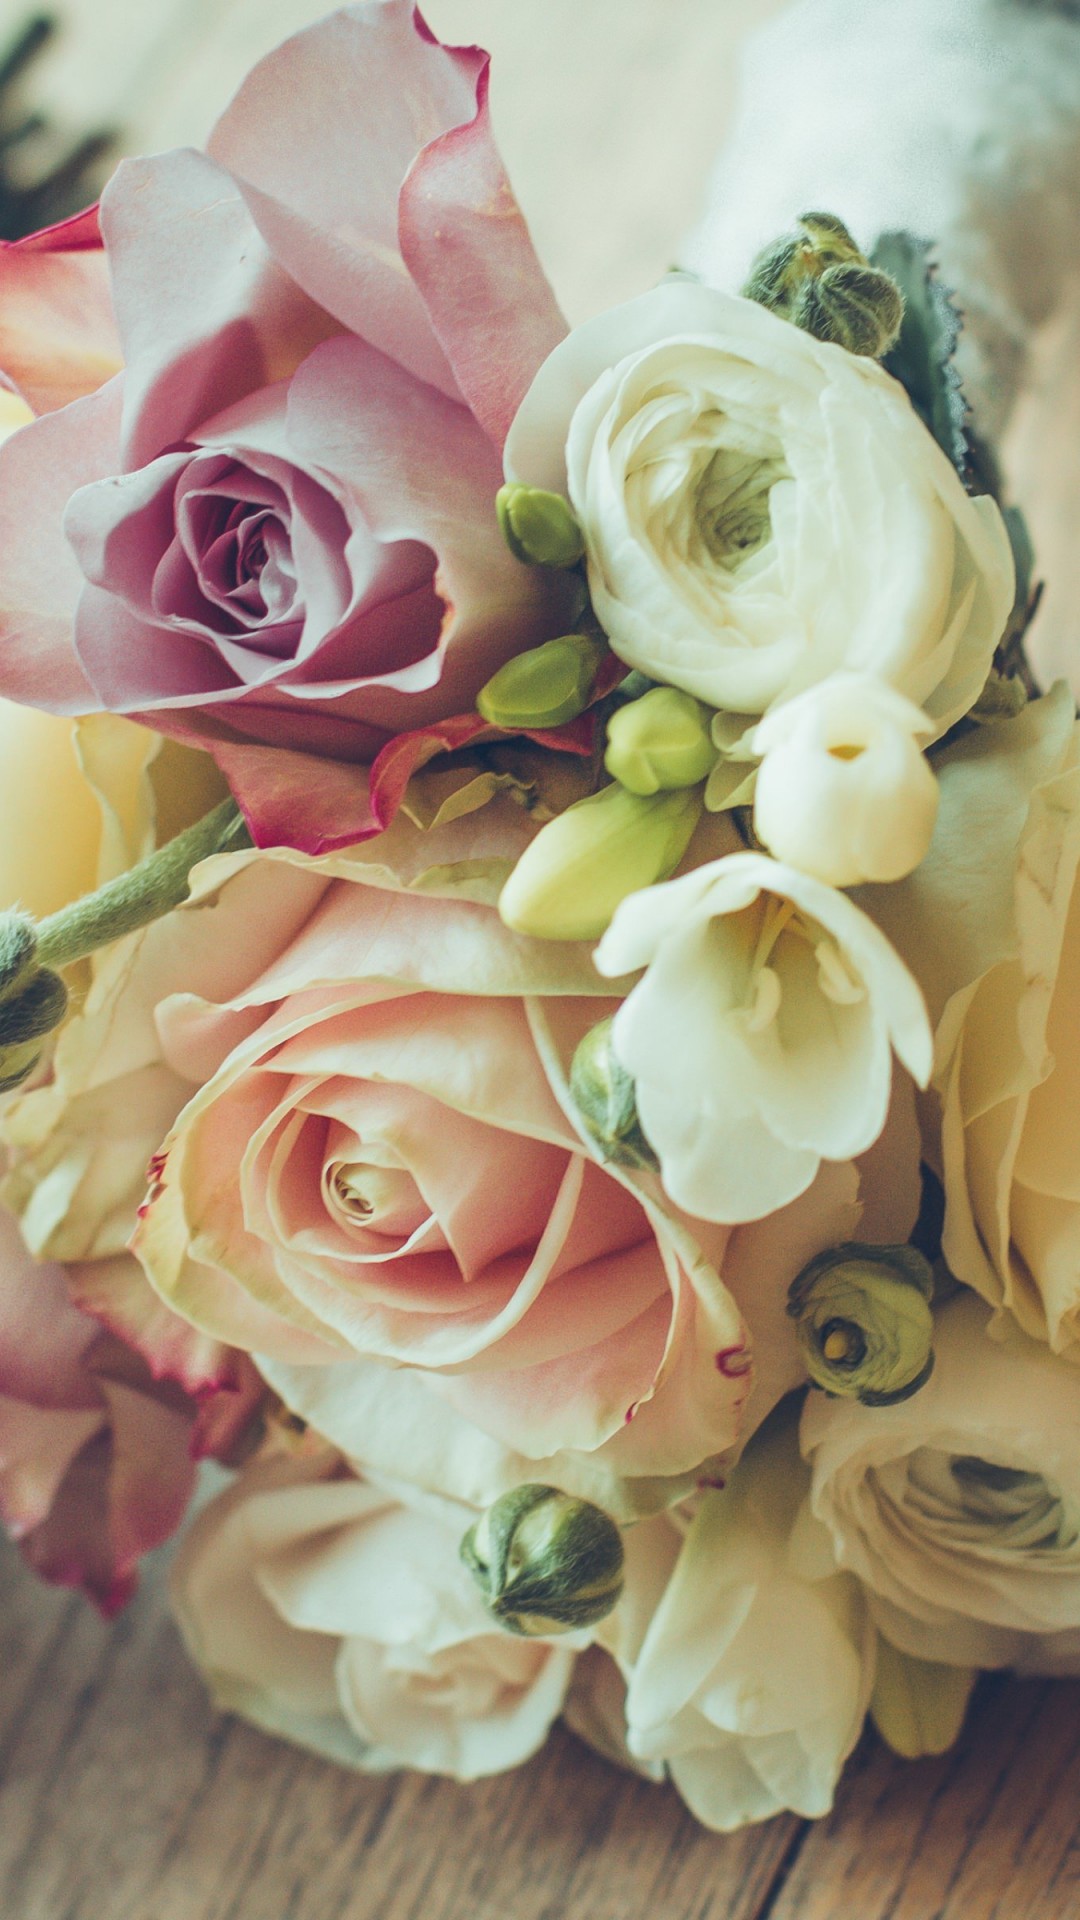 Roses Bouquet Composition Wallpaper for Google Nexus 5